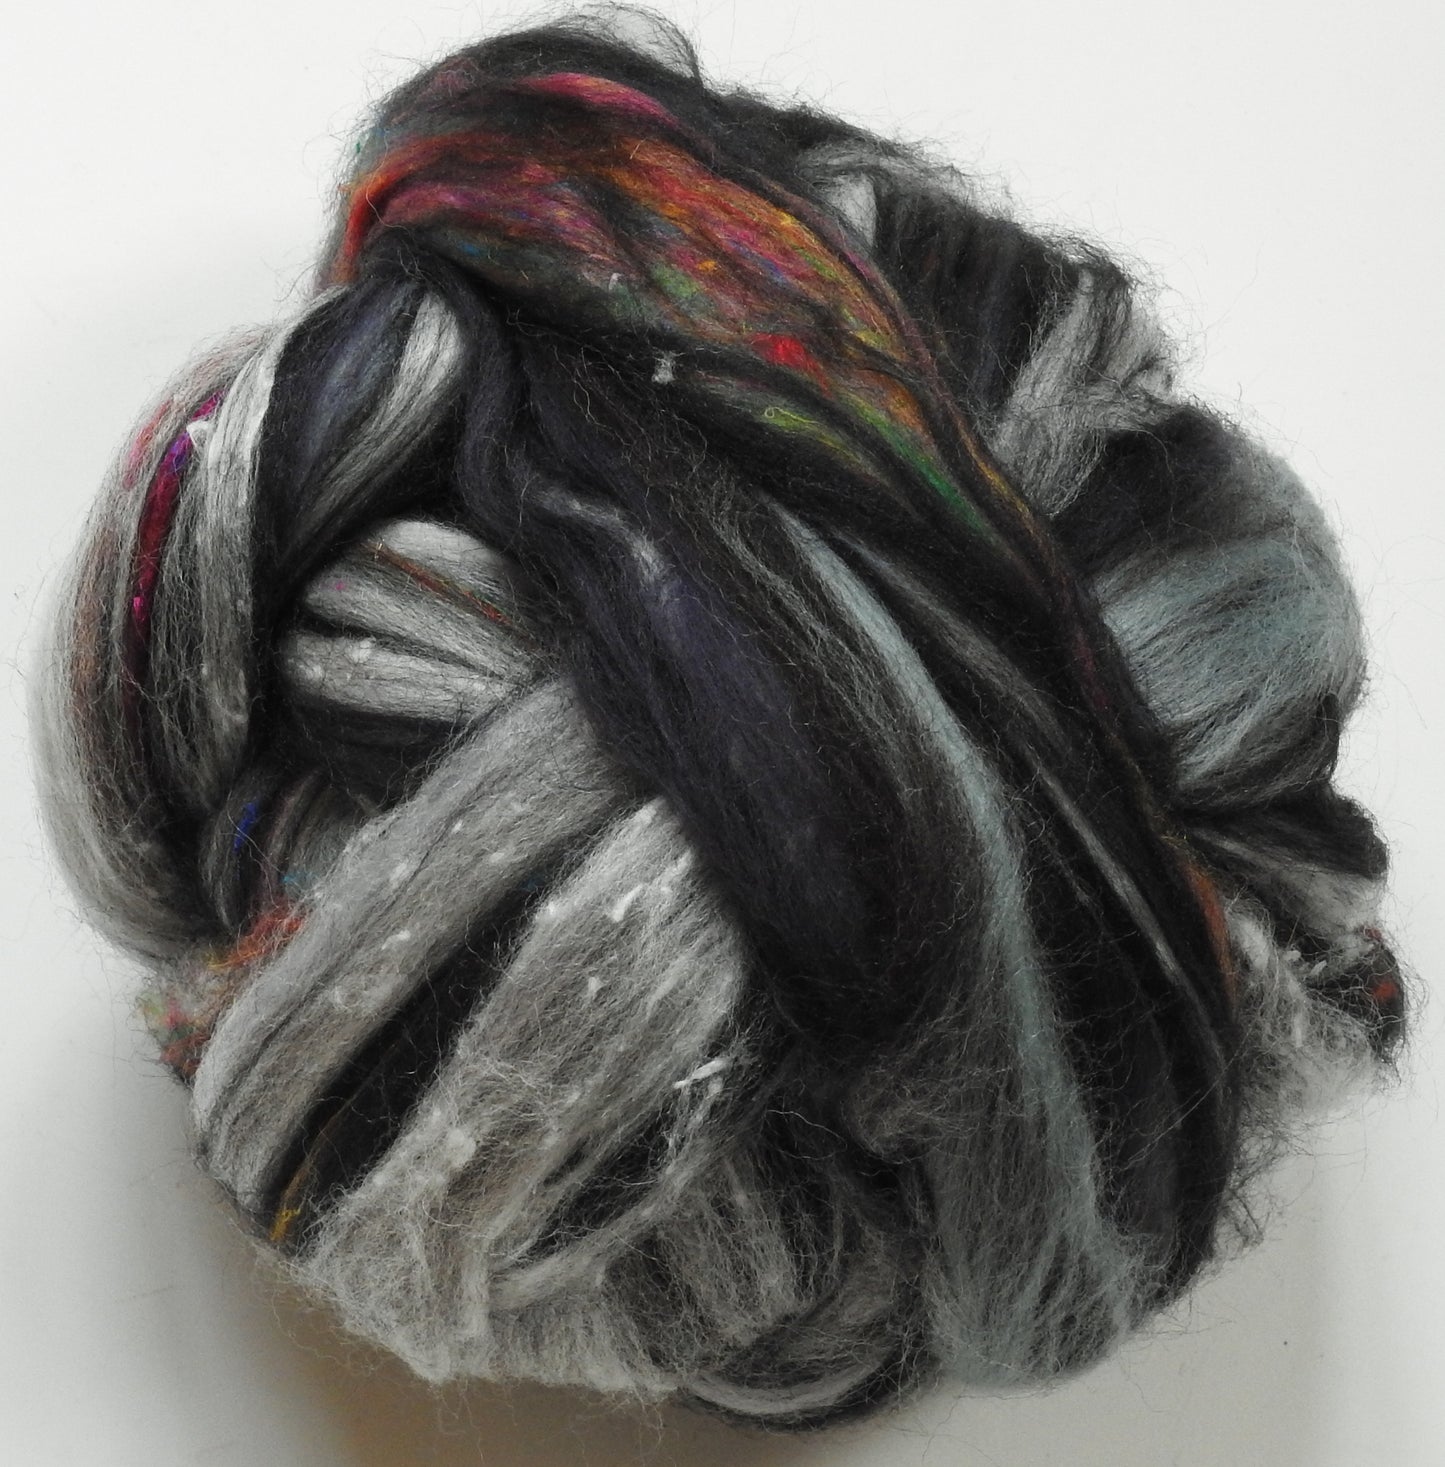 Misty Mountains - Merino/Shetland/Sari and Mulberry silks/Tweed Blend (40/25/25/10)